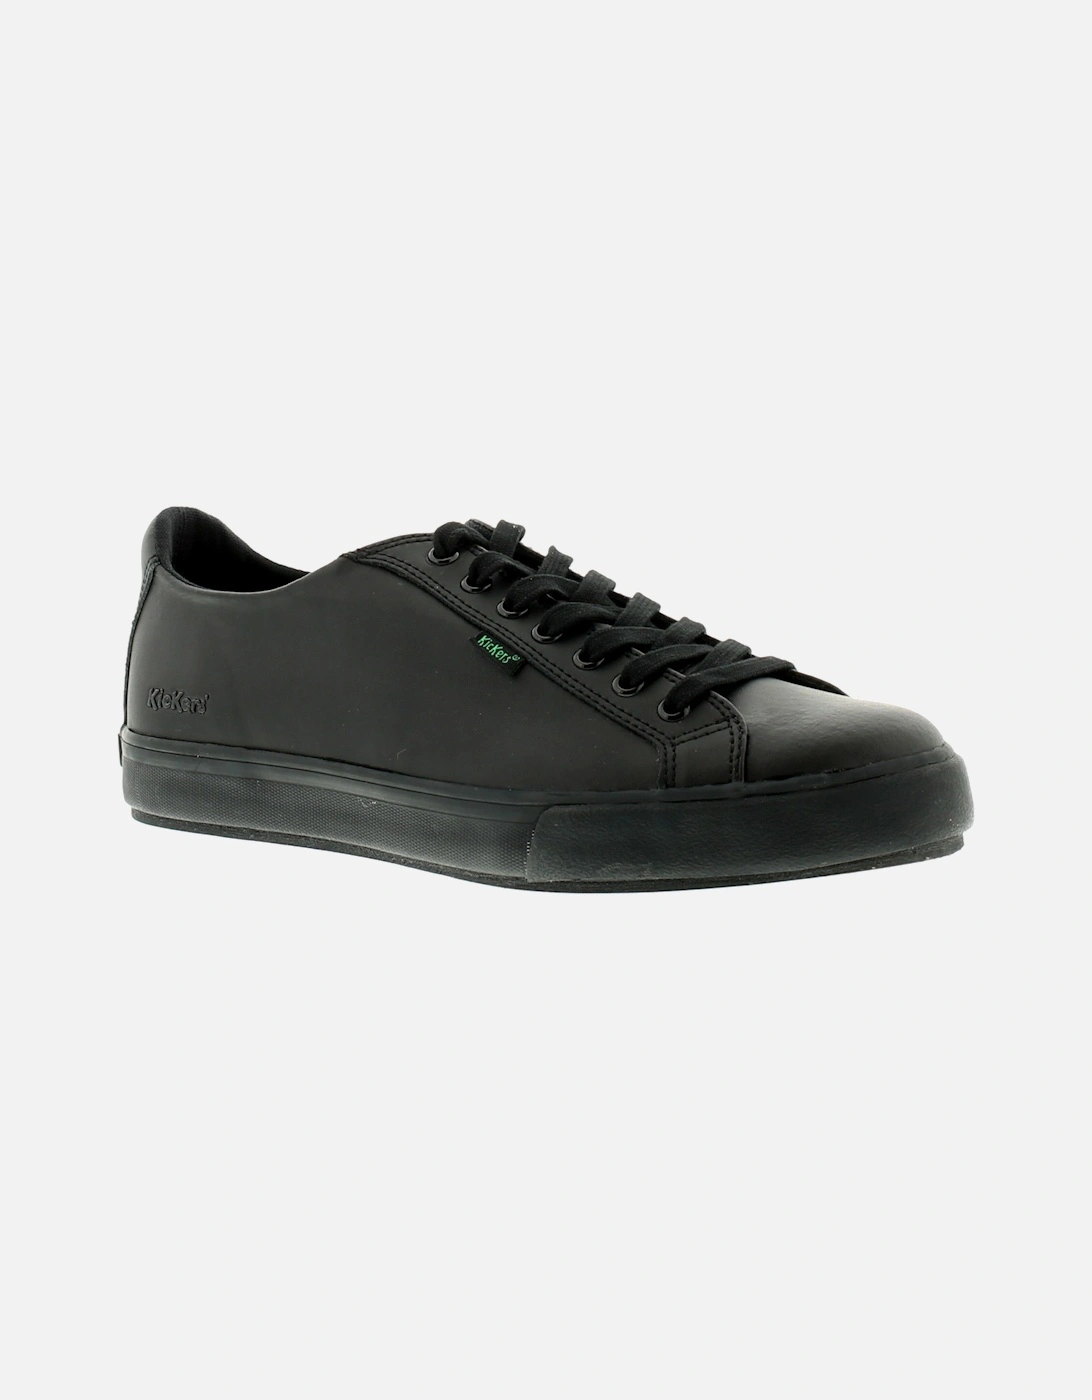 Mens Shoes Pumps Tovni Lacer Leather Lace Up black UK Size, 6 of 5